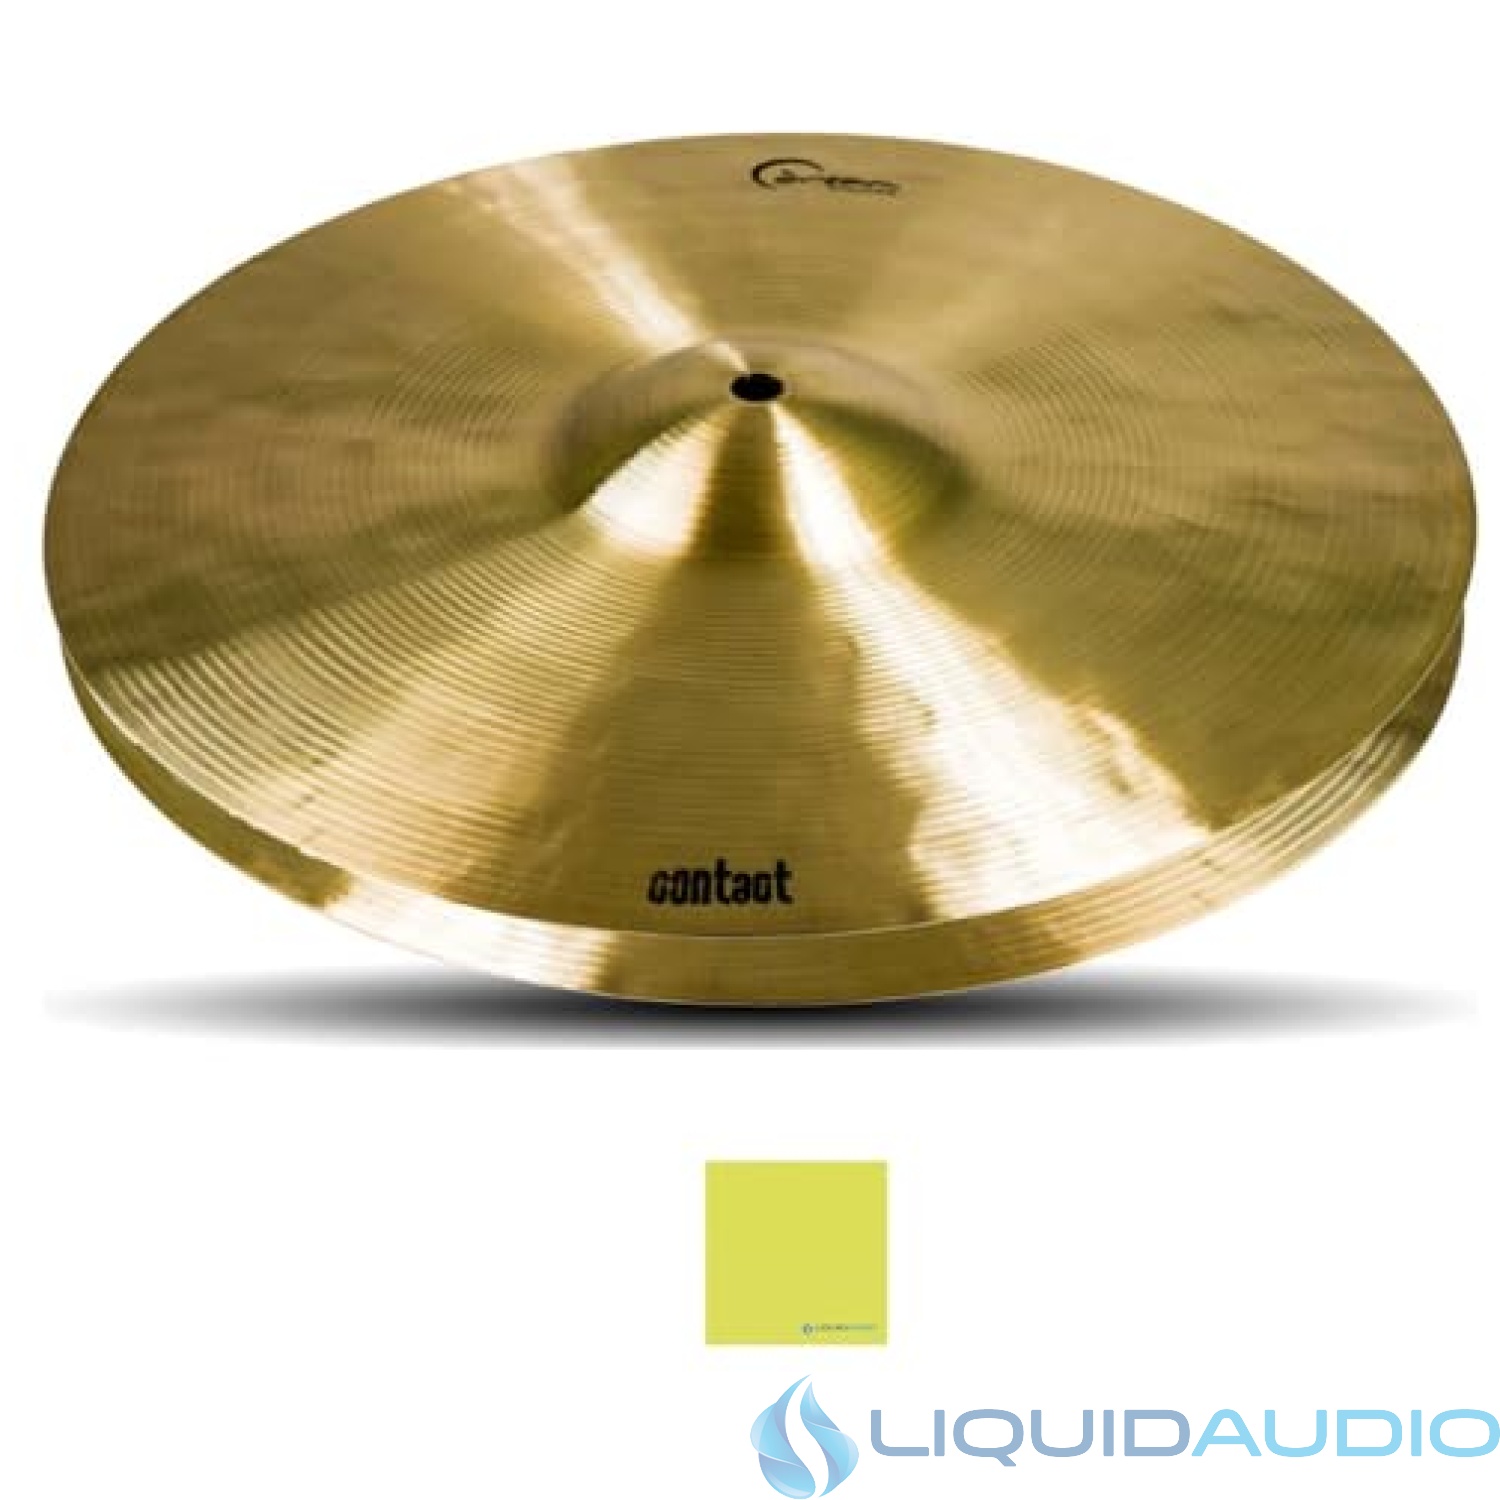 Dream Cymbals and Gongs C-HH14 Contact Hi Hat 14" Cymbal Bundle w/Liquid Audio Polishing Cloth